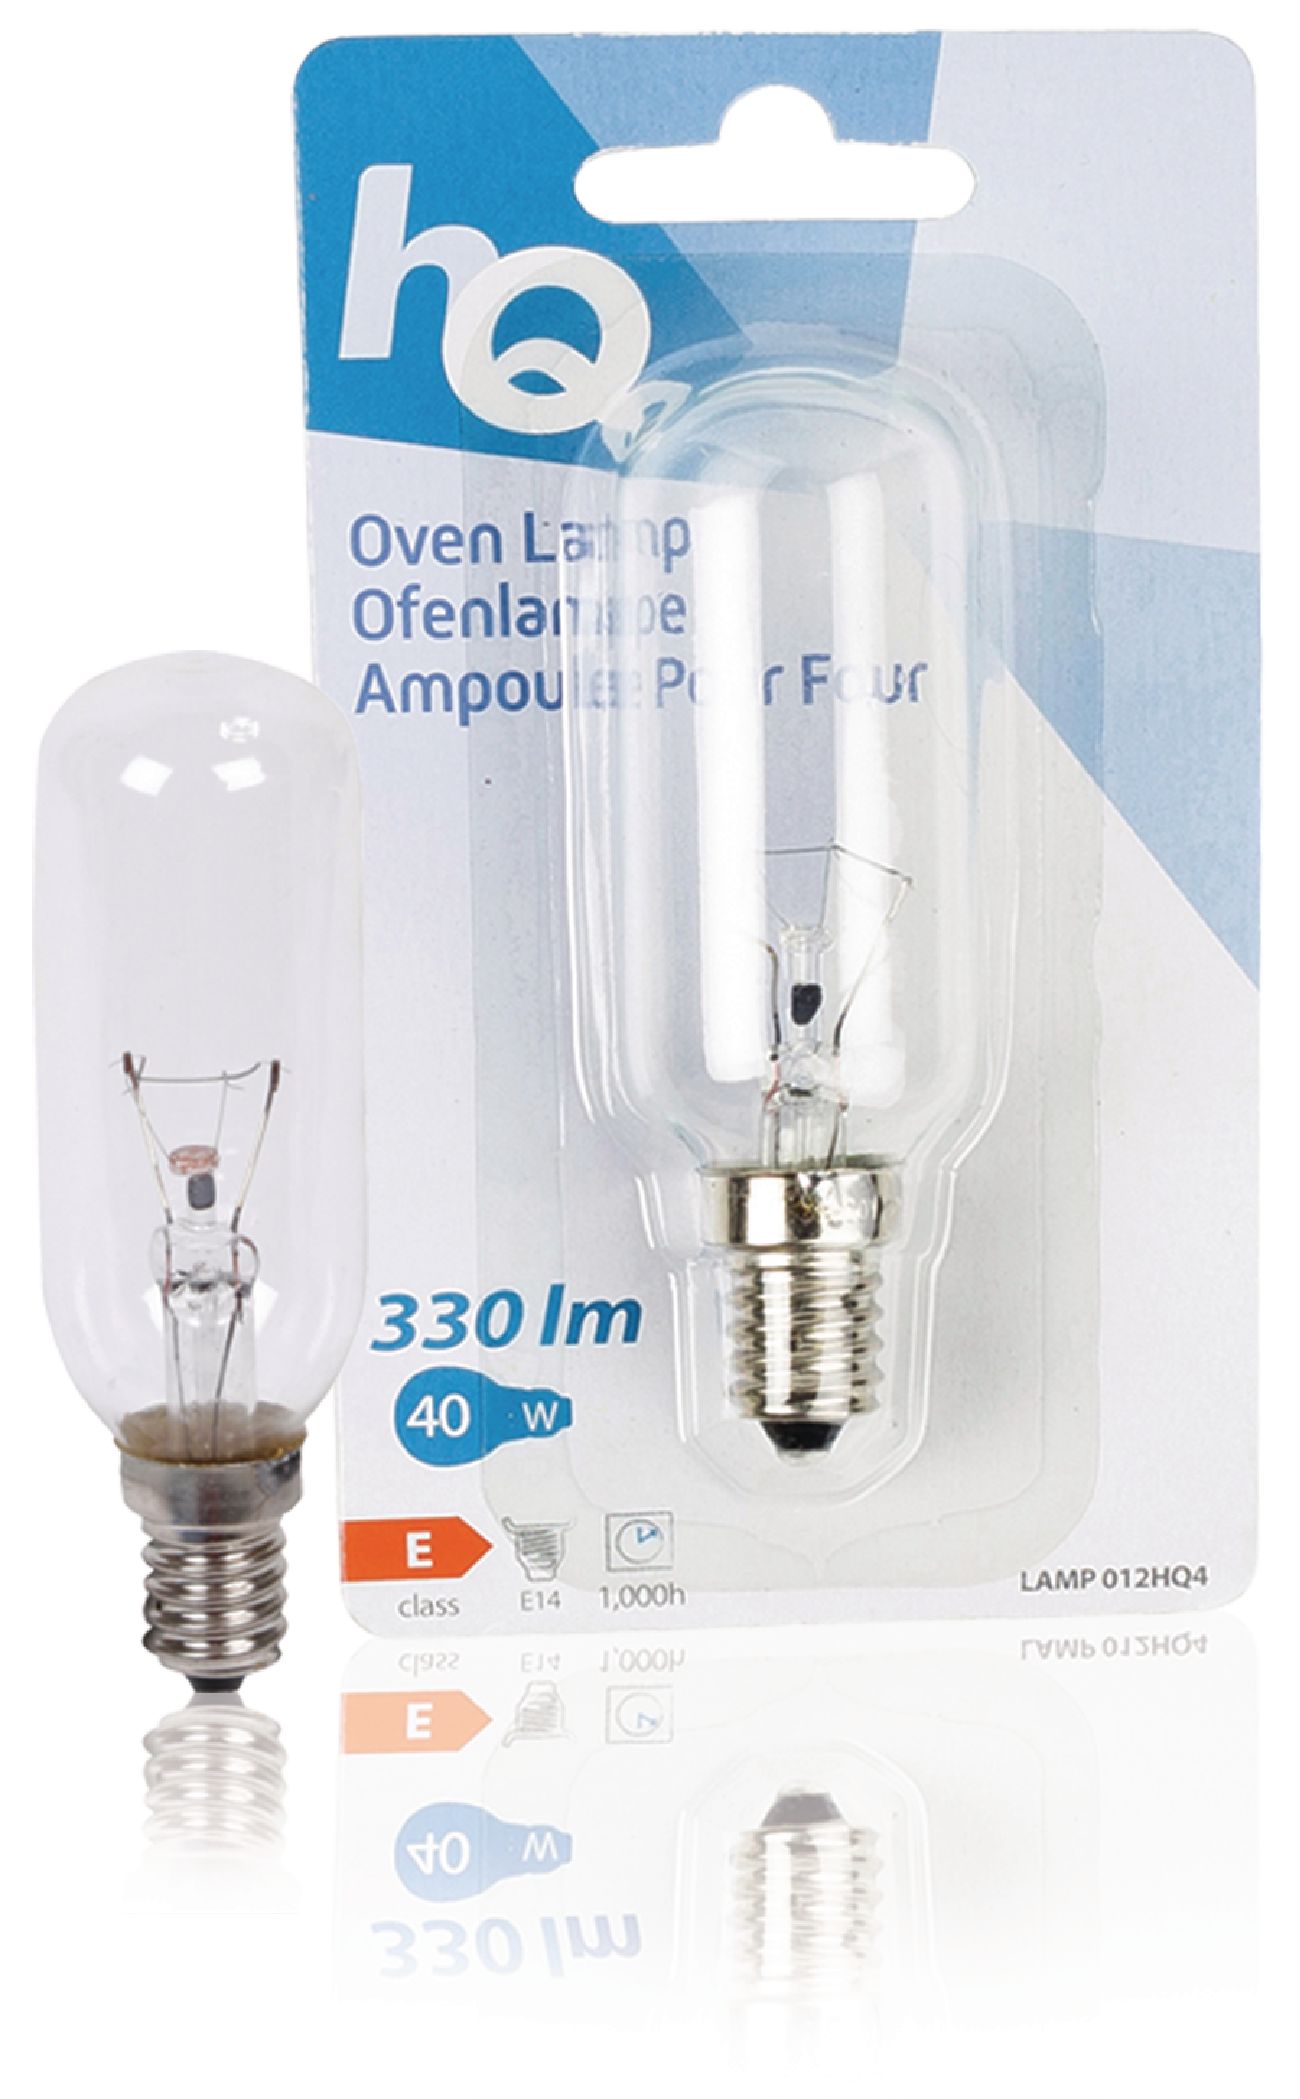 E44-Lampe e14 230v 40w special four à 2,00 € (Ampoules pour four)